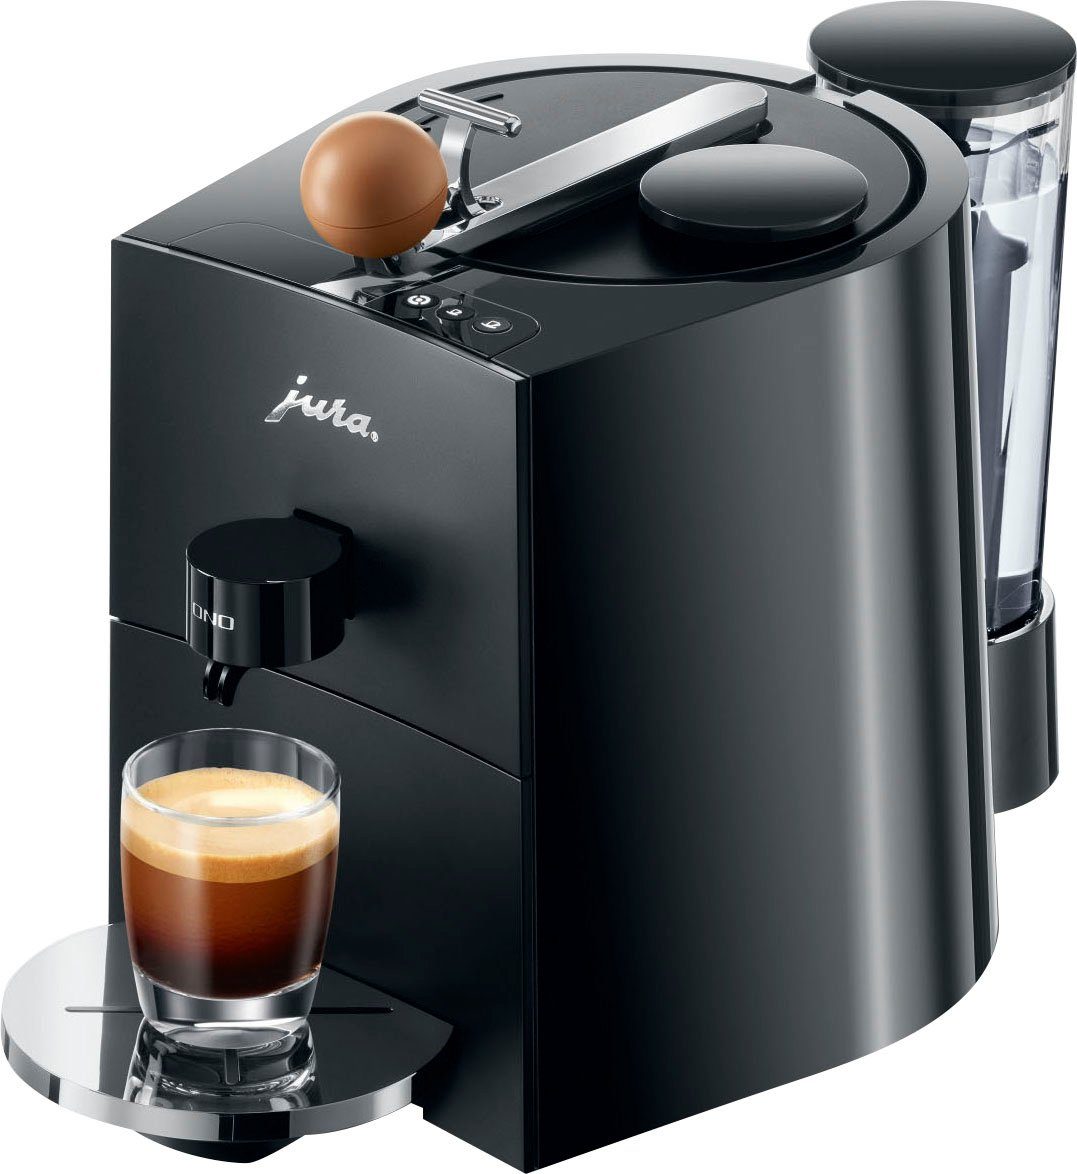 ONO, JURA Espressomaschine 15505 Kaffeehalbautomat